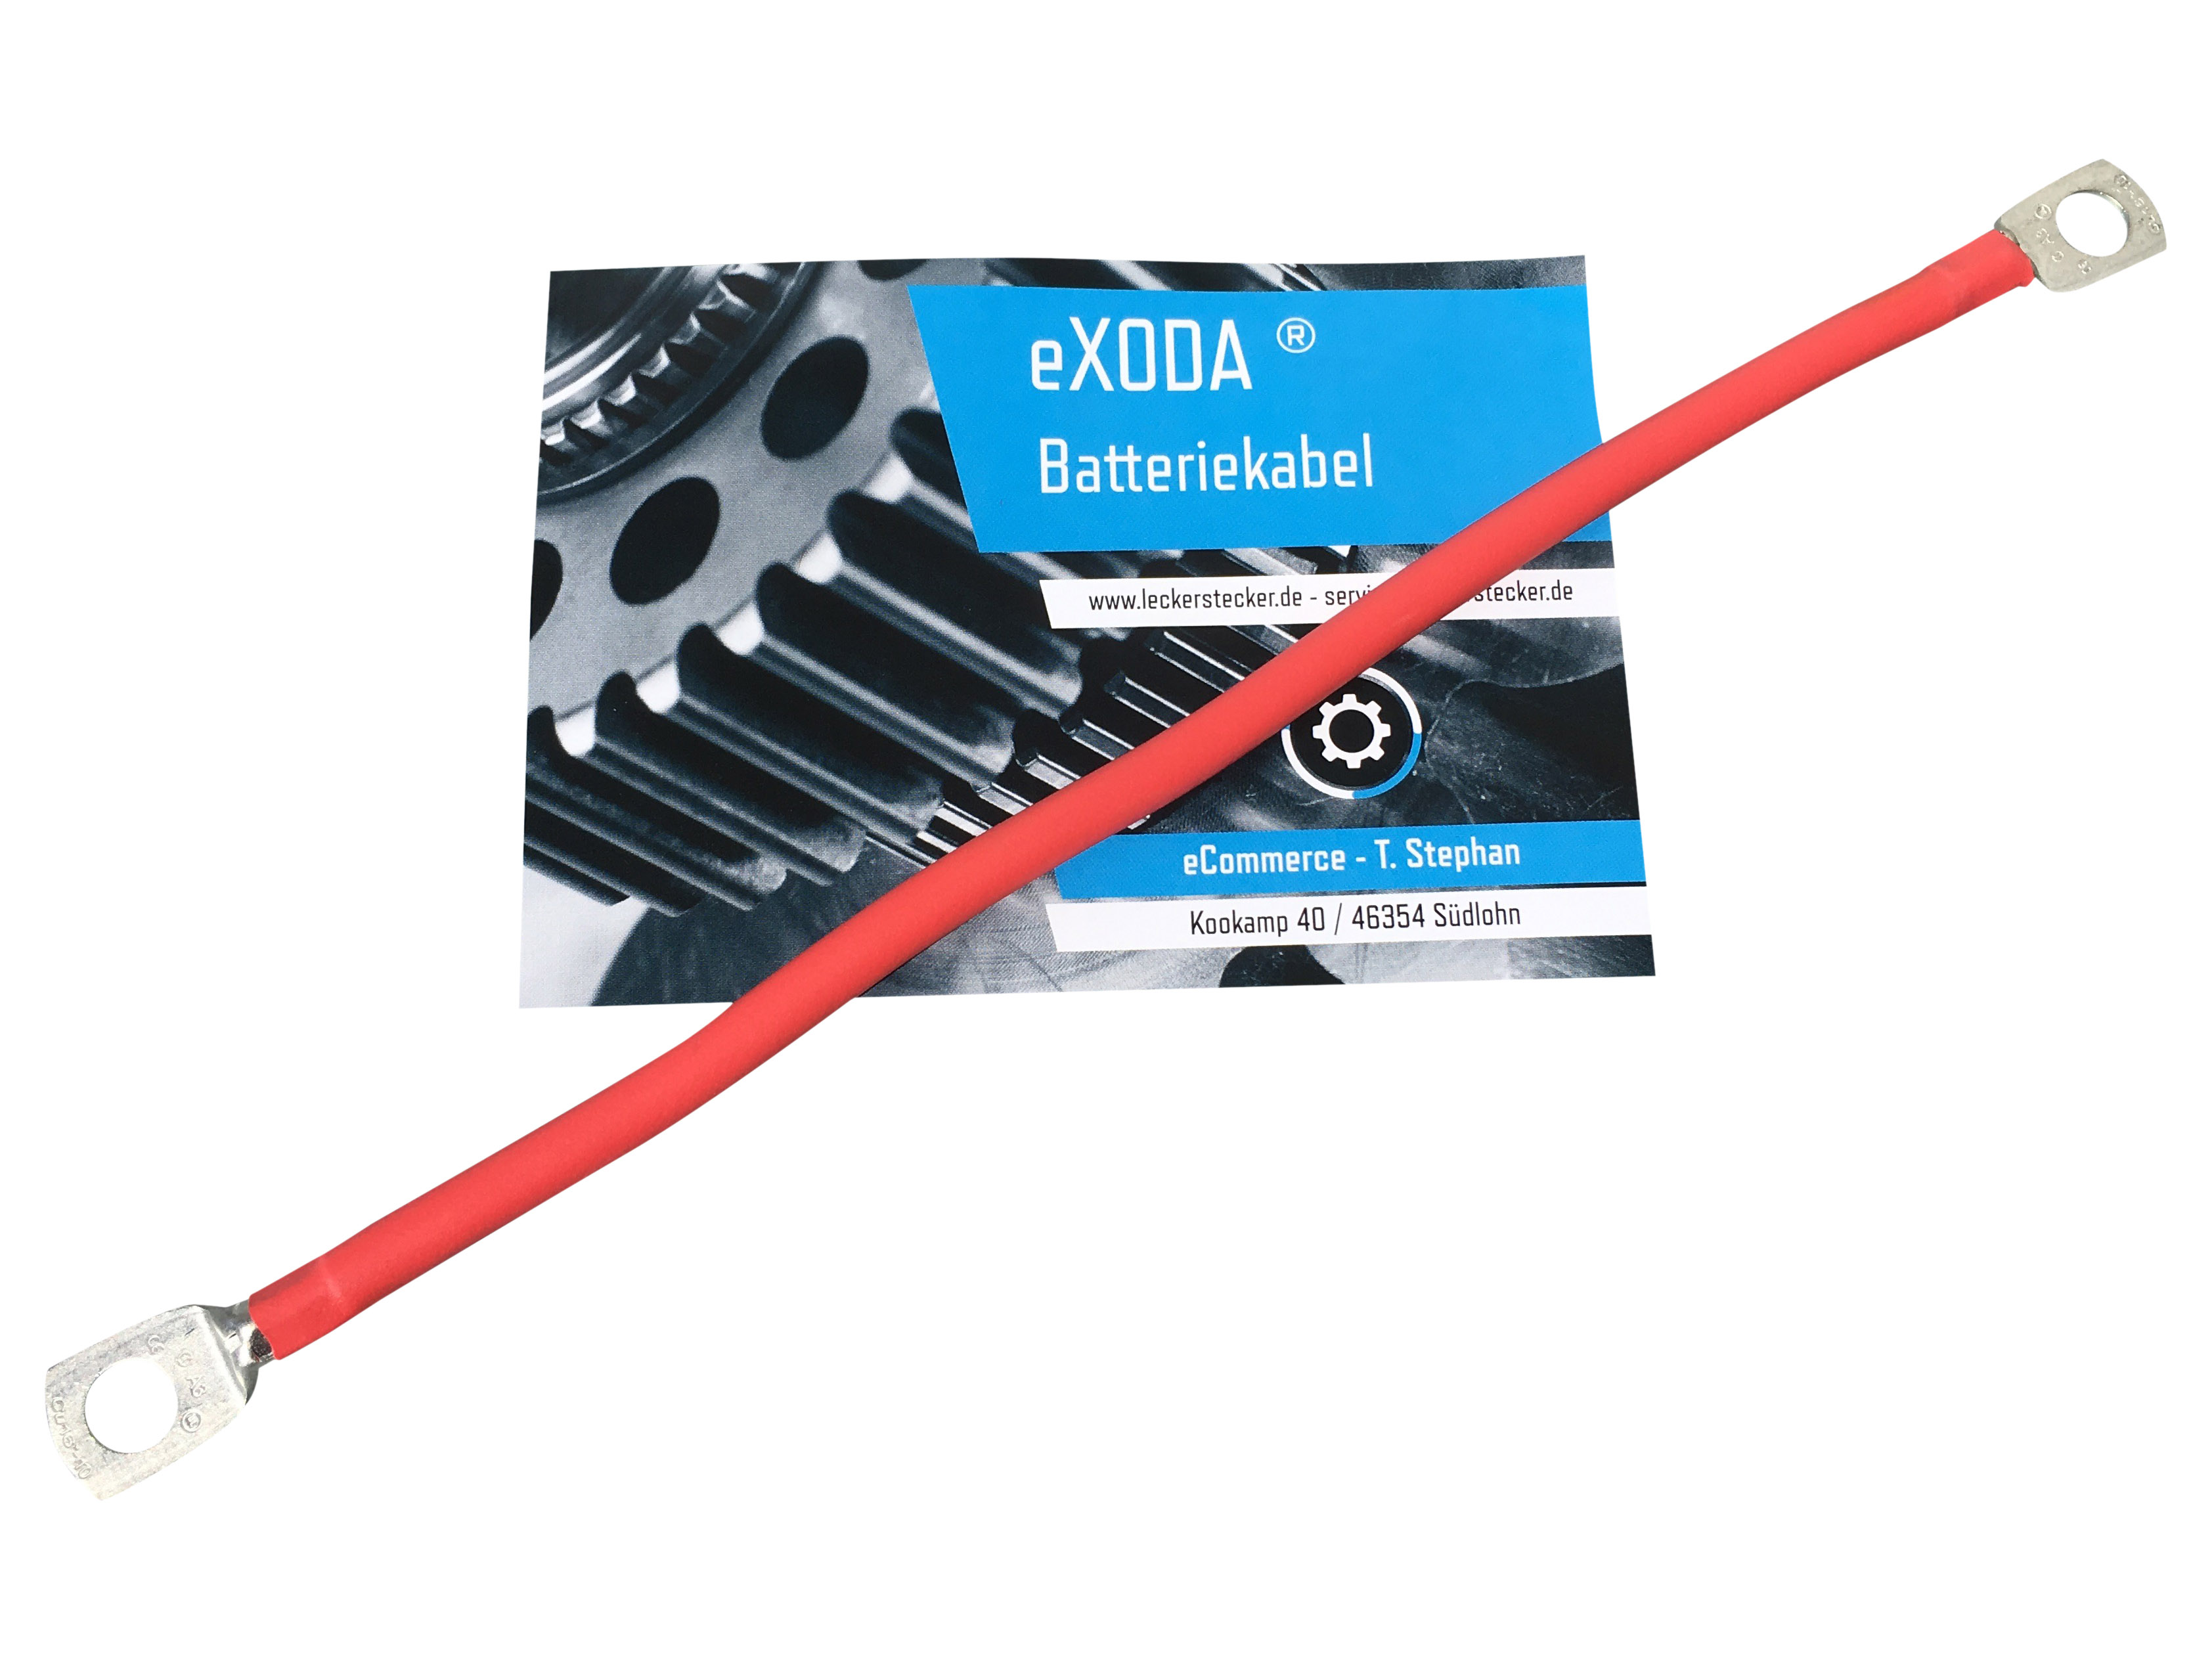 eXODA Batteriekabel 25 mm2 200cm mit Ringösen M10 rot Auto KFZ Ladegerät Kabel 